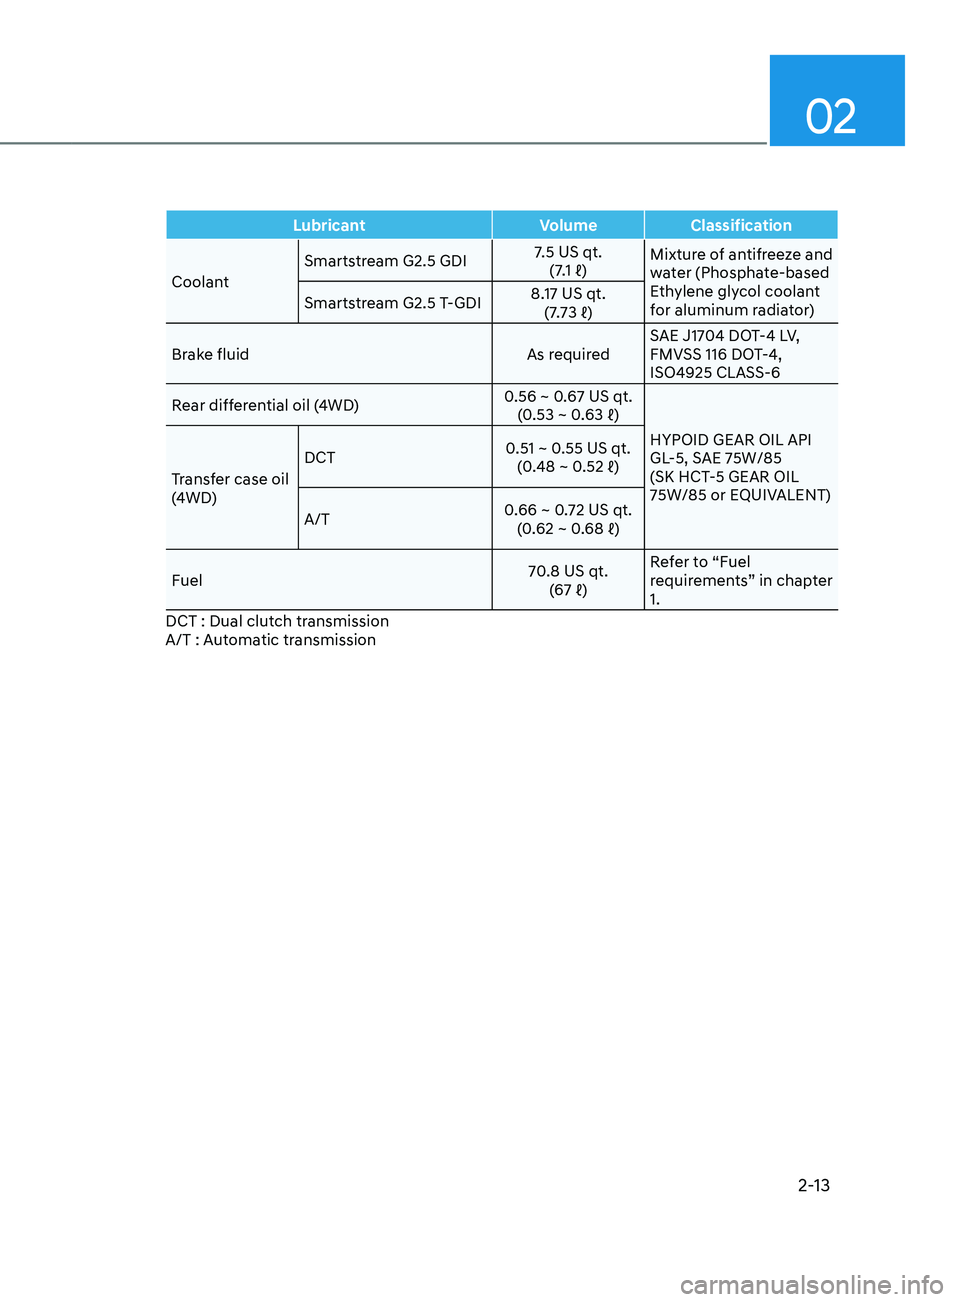 HYUNDAI SANTA FE LIMITED 2021  Owners Manual 02
2-13
LubricantVolumeClassification
Coolant Smartstream G2.5 GDI
7.5 US qt.
(7.1
	ℓ) Mixtur

e of antifreeze and 
water (Phosphate-based 
Ethylene glycol coolant 
for aluminum radiator)
Smartstrea